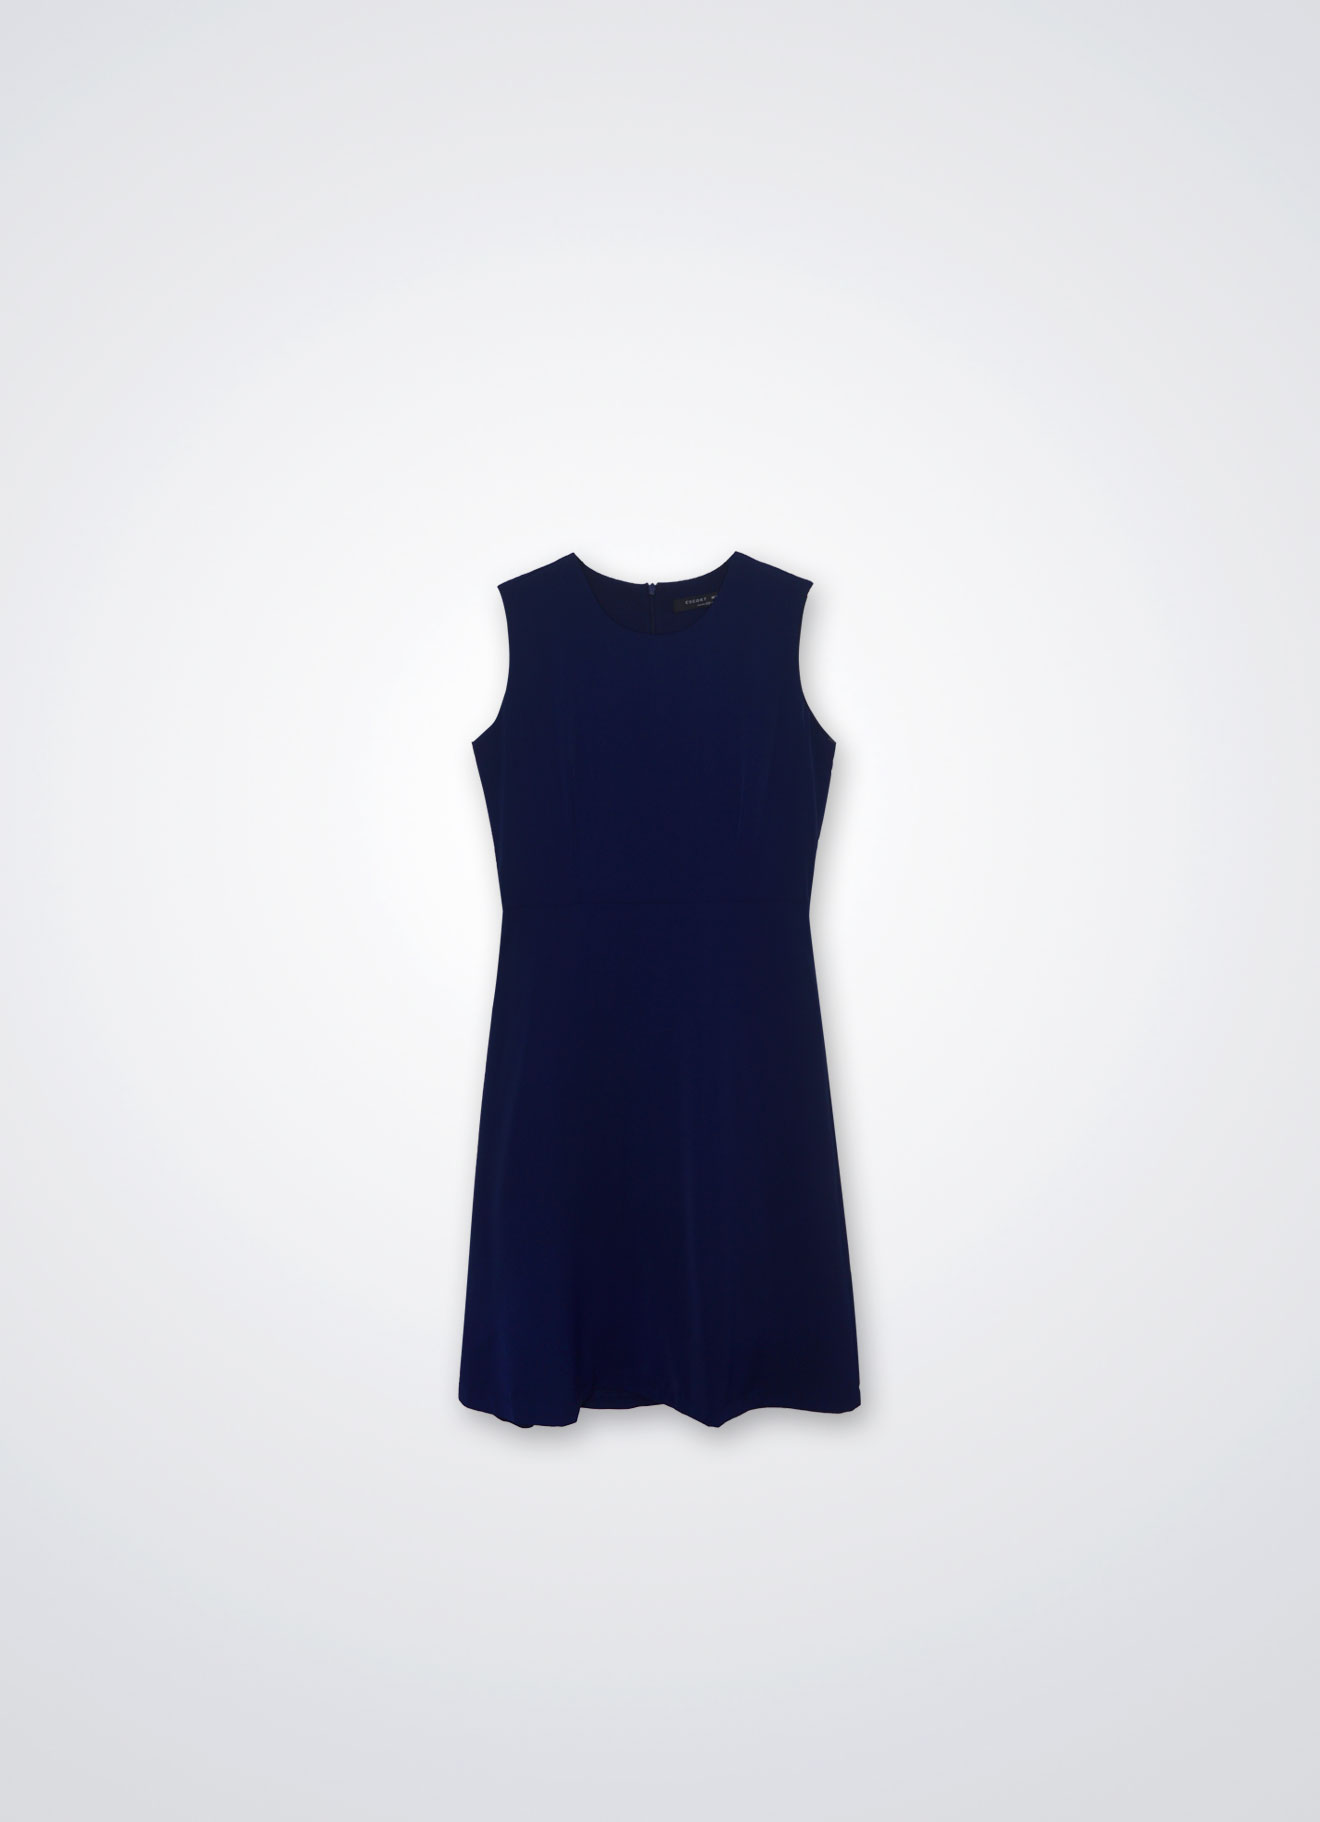 Medieval-Blue by Sleeveless Dress